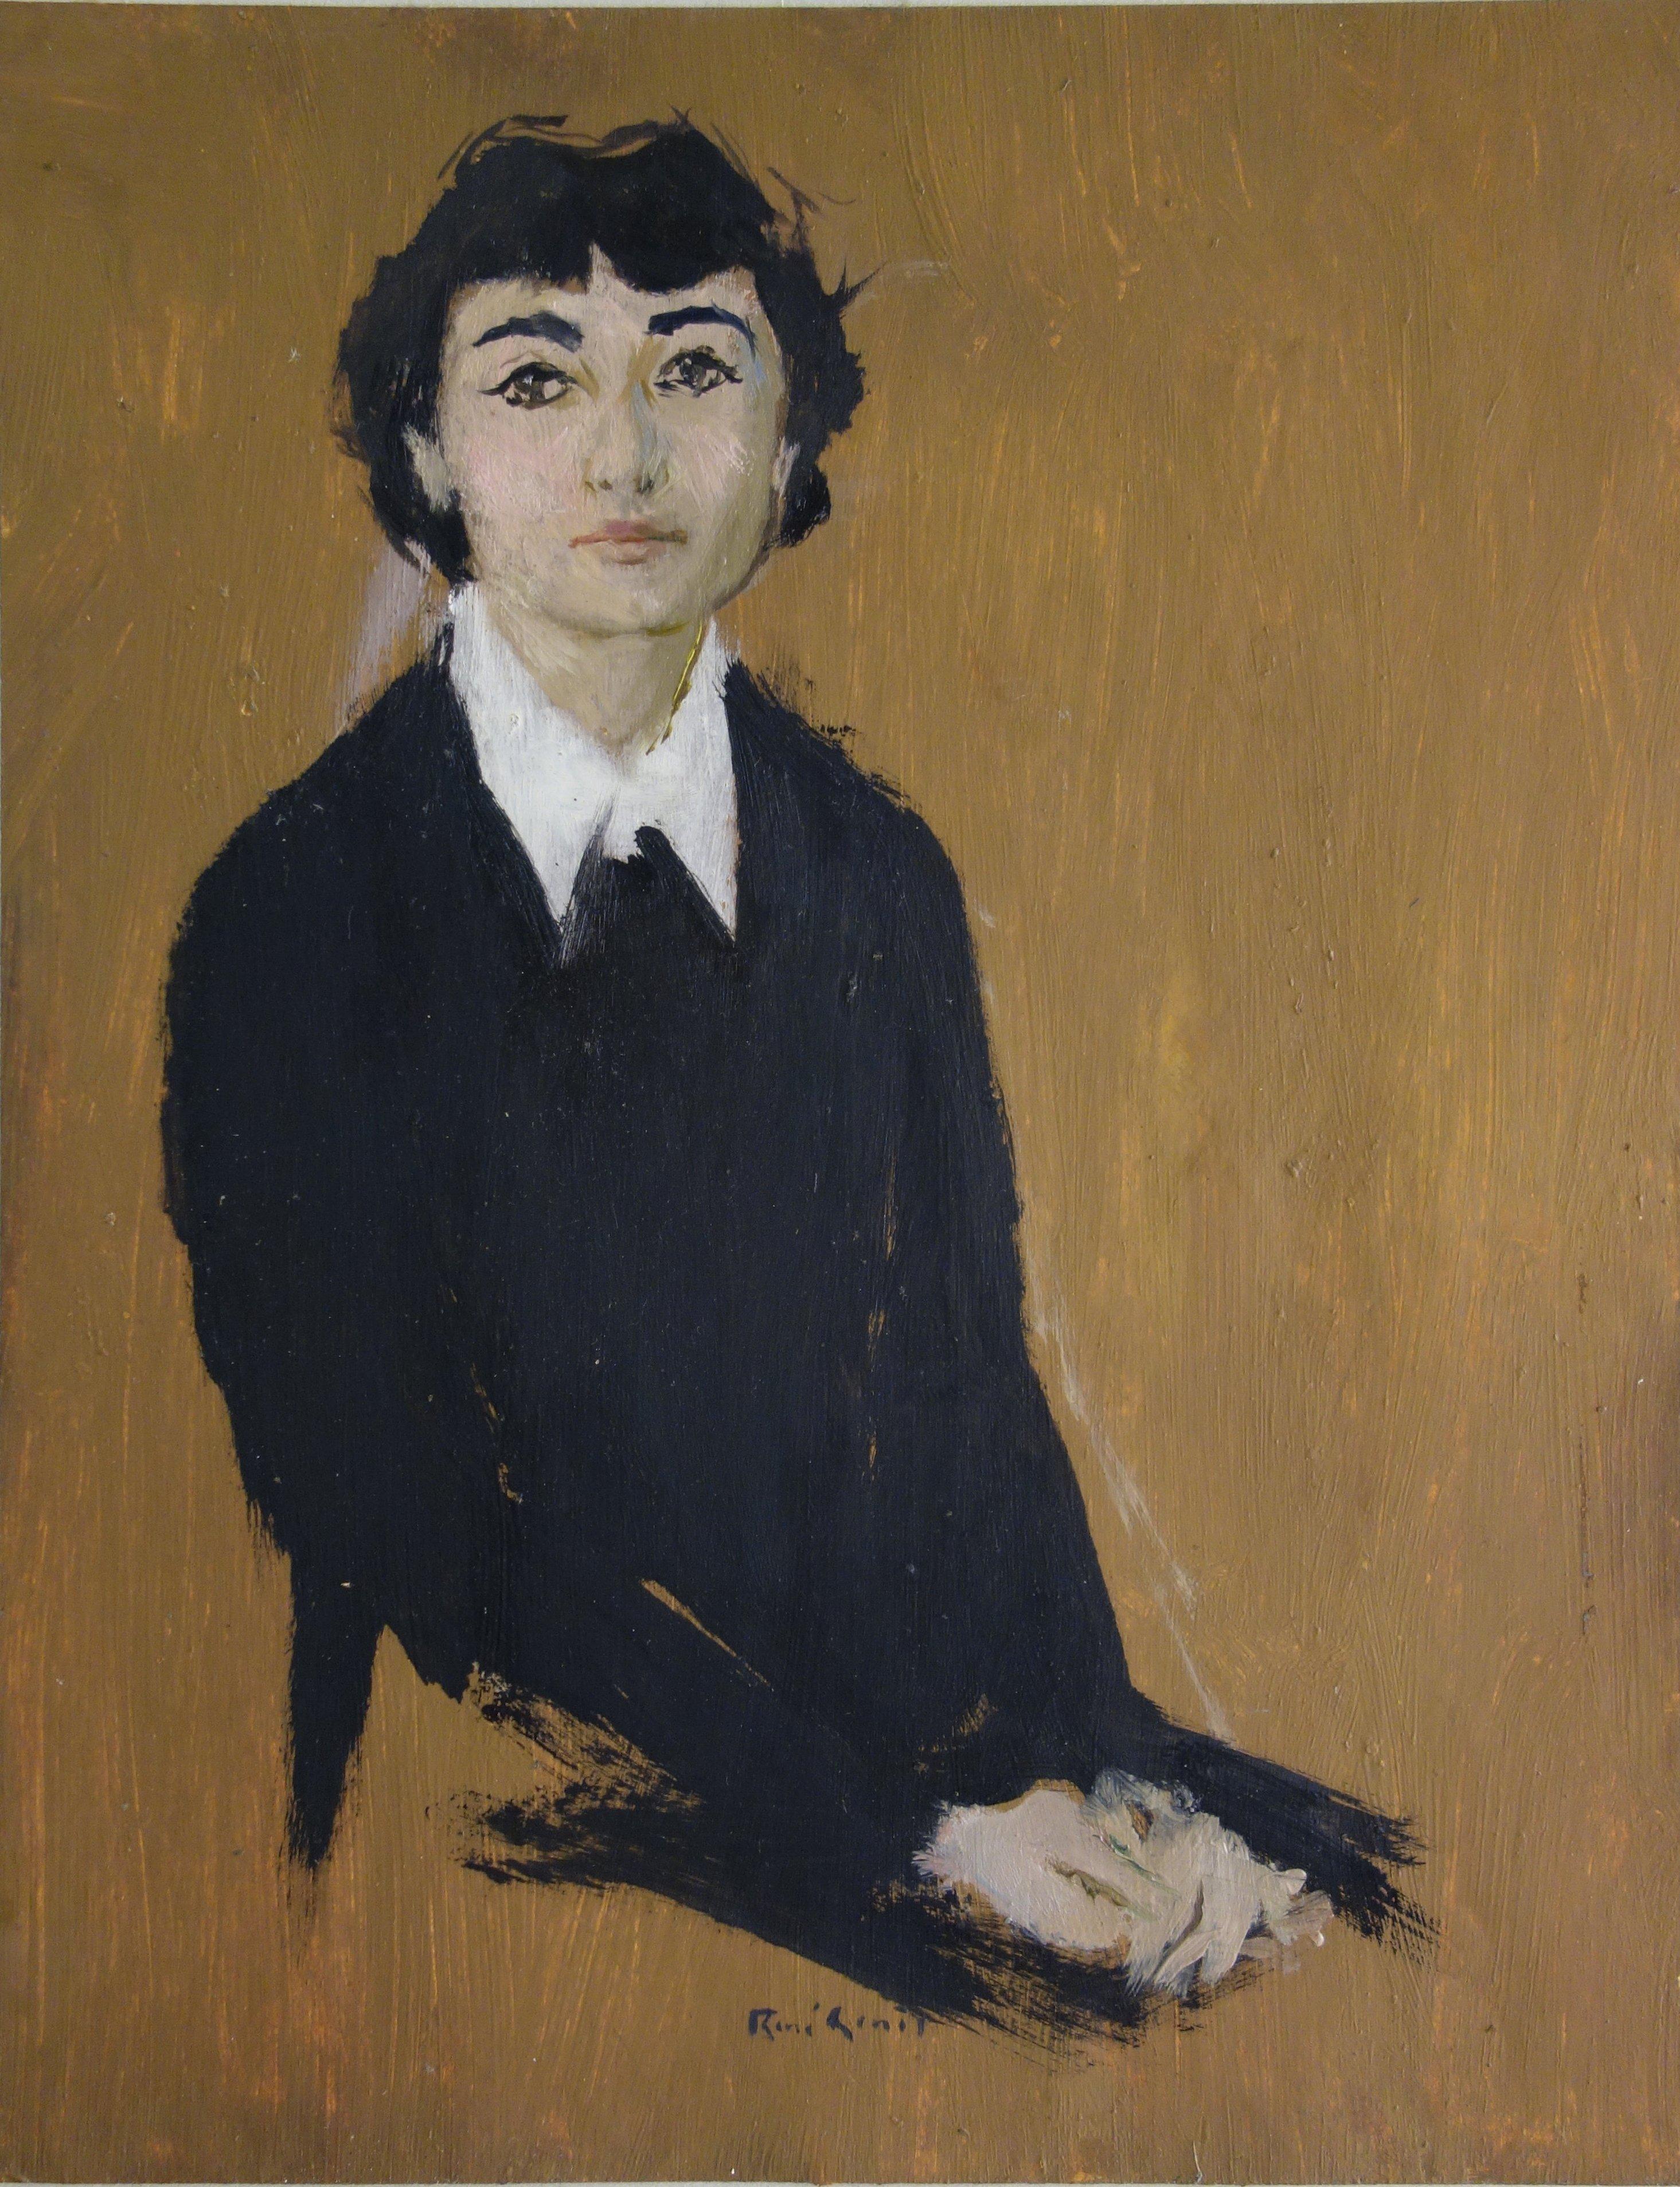 René Genis Portrait Painting - Dreaming Woman - Original hansigned oil on paper